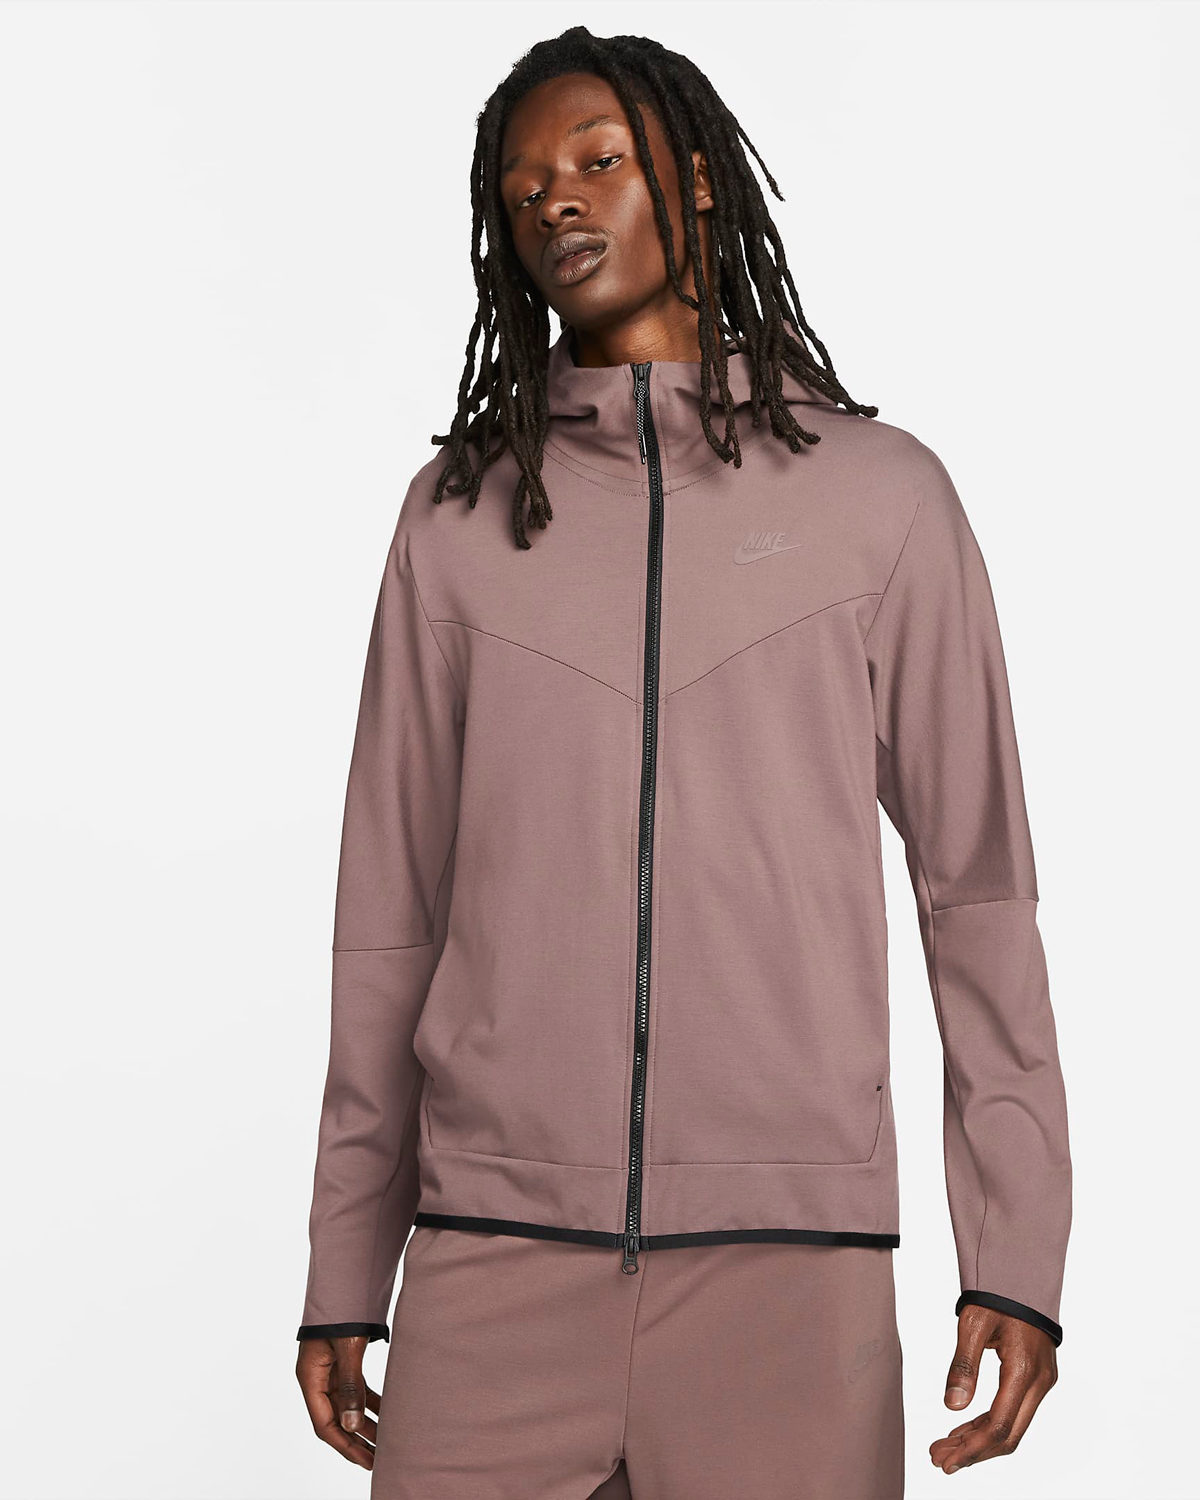 Nike-Tech-Fleece-Lightweight-Full-Zip-Hoodie-Jacket-Plum-Eclipse